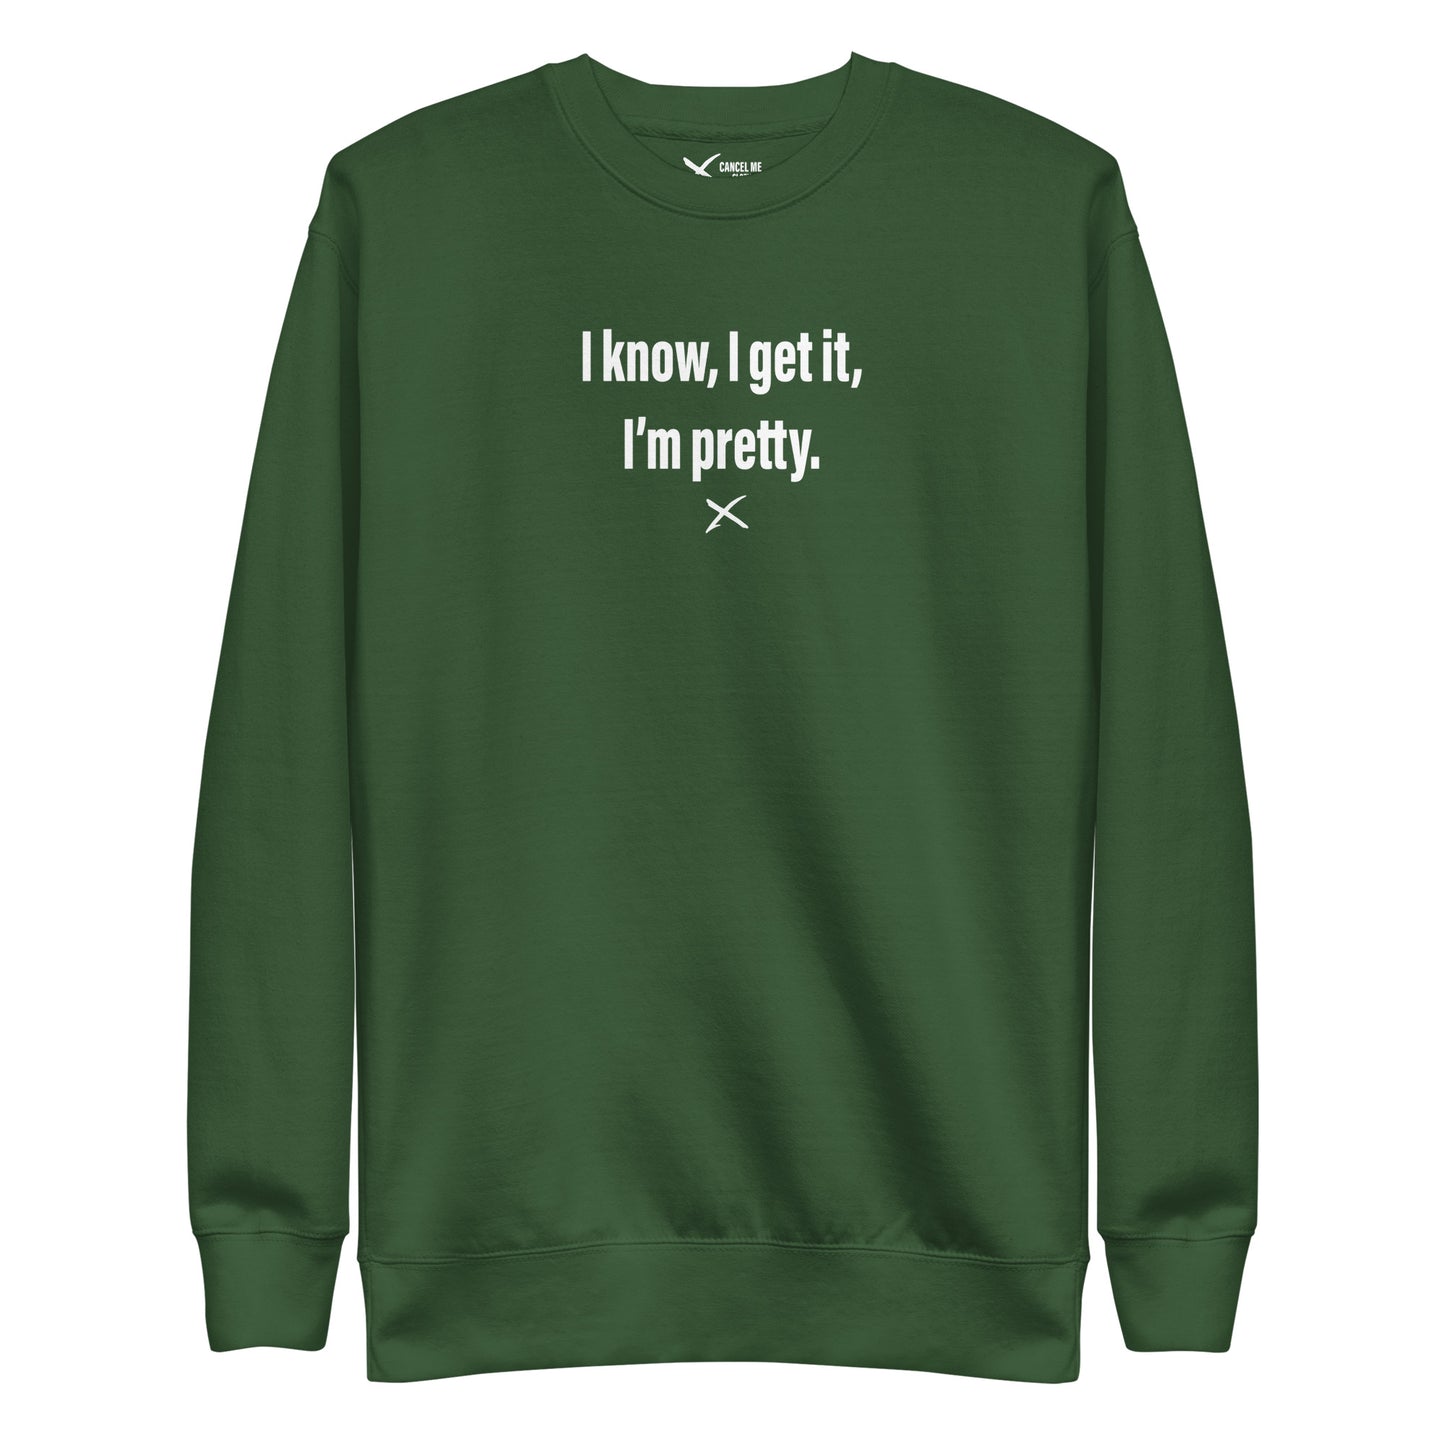 I know, I get it, I'm pretty. - Sweatshirt